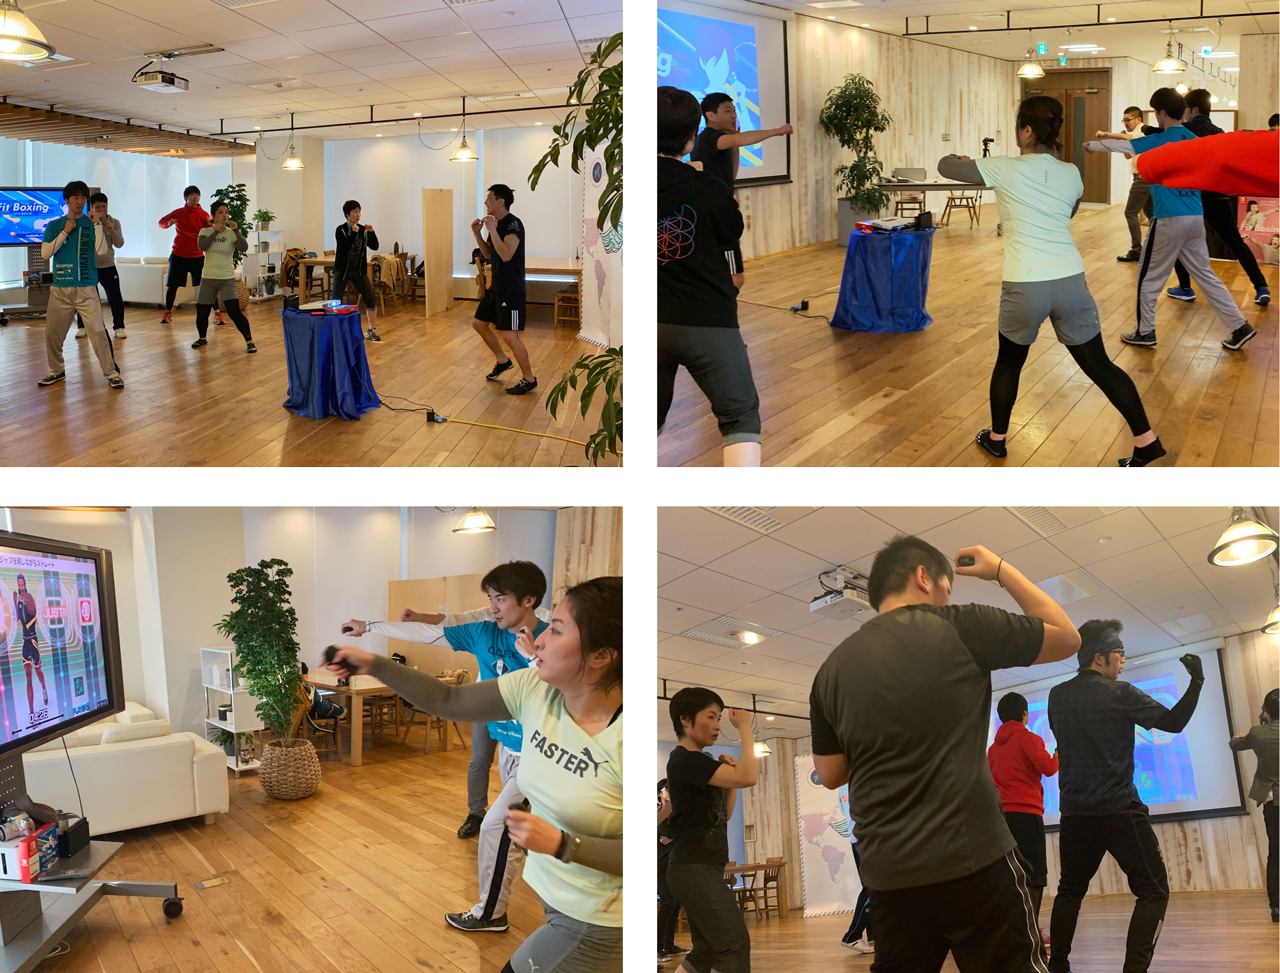 Nintendo Switch ソフト「Fit Boxing」の体験イベントを開催(2019年3月15日) | イマジニア株式会社